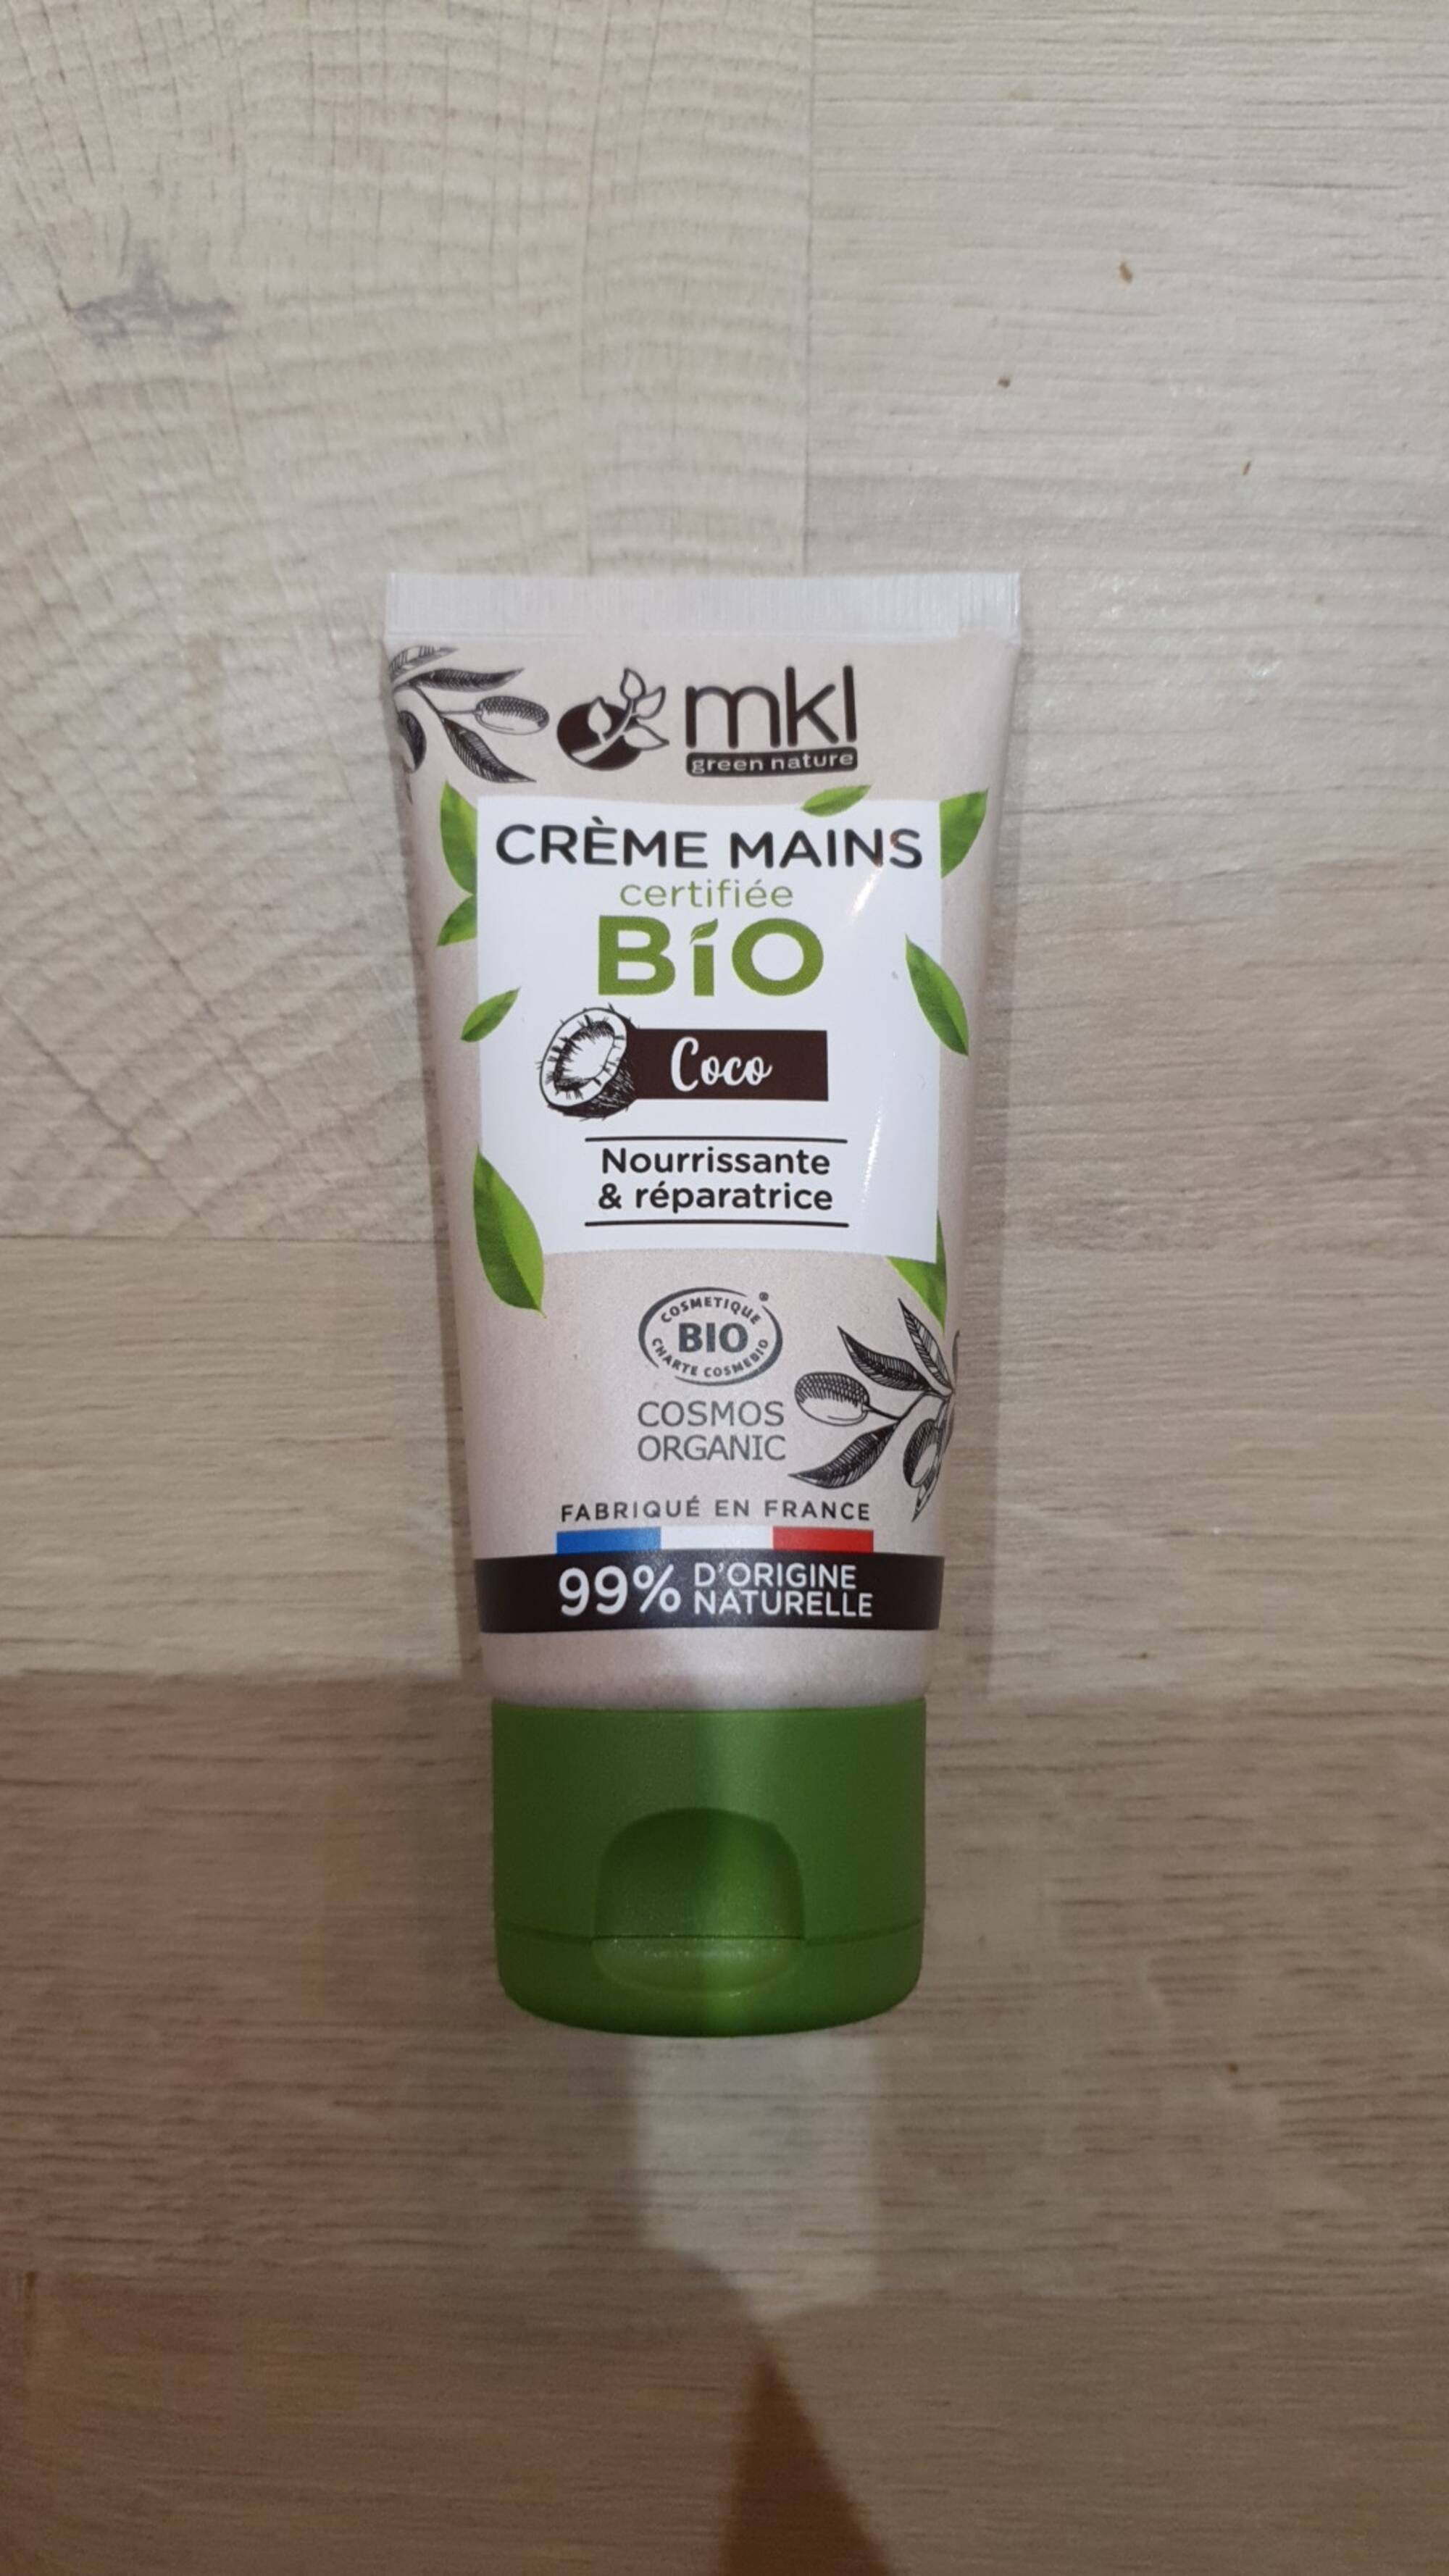 MKL GREEN NATURE - Crème mains Coco